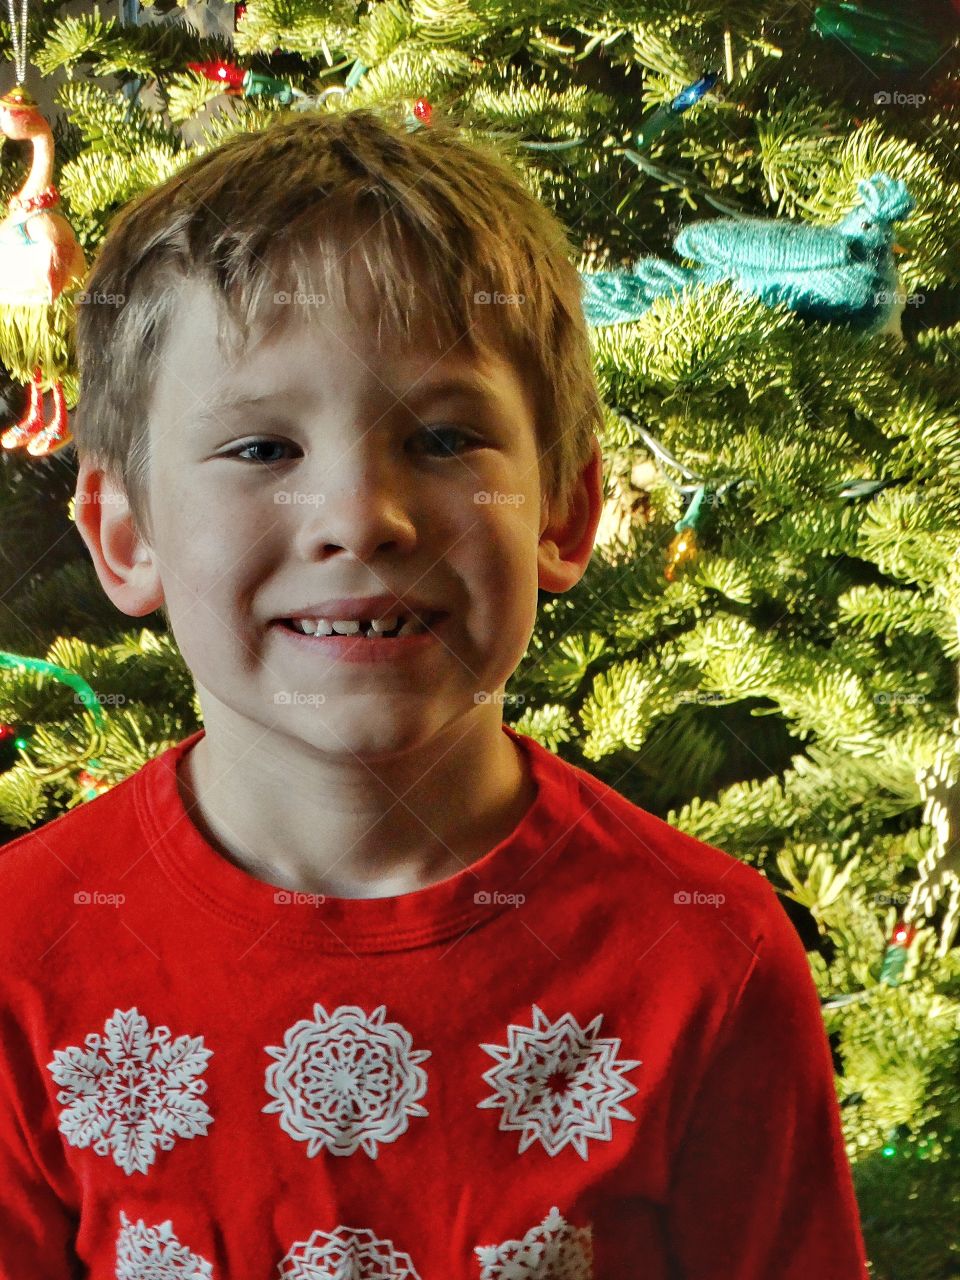 Smiling Young Boy At Christmas
